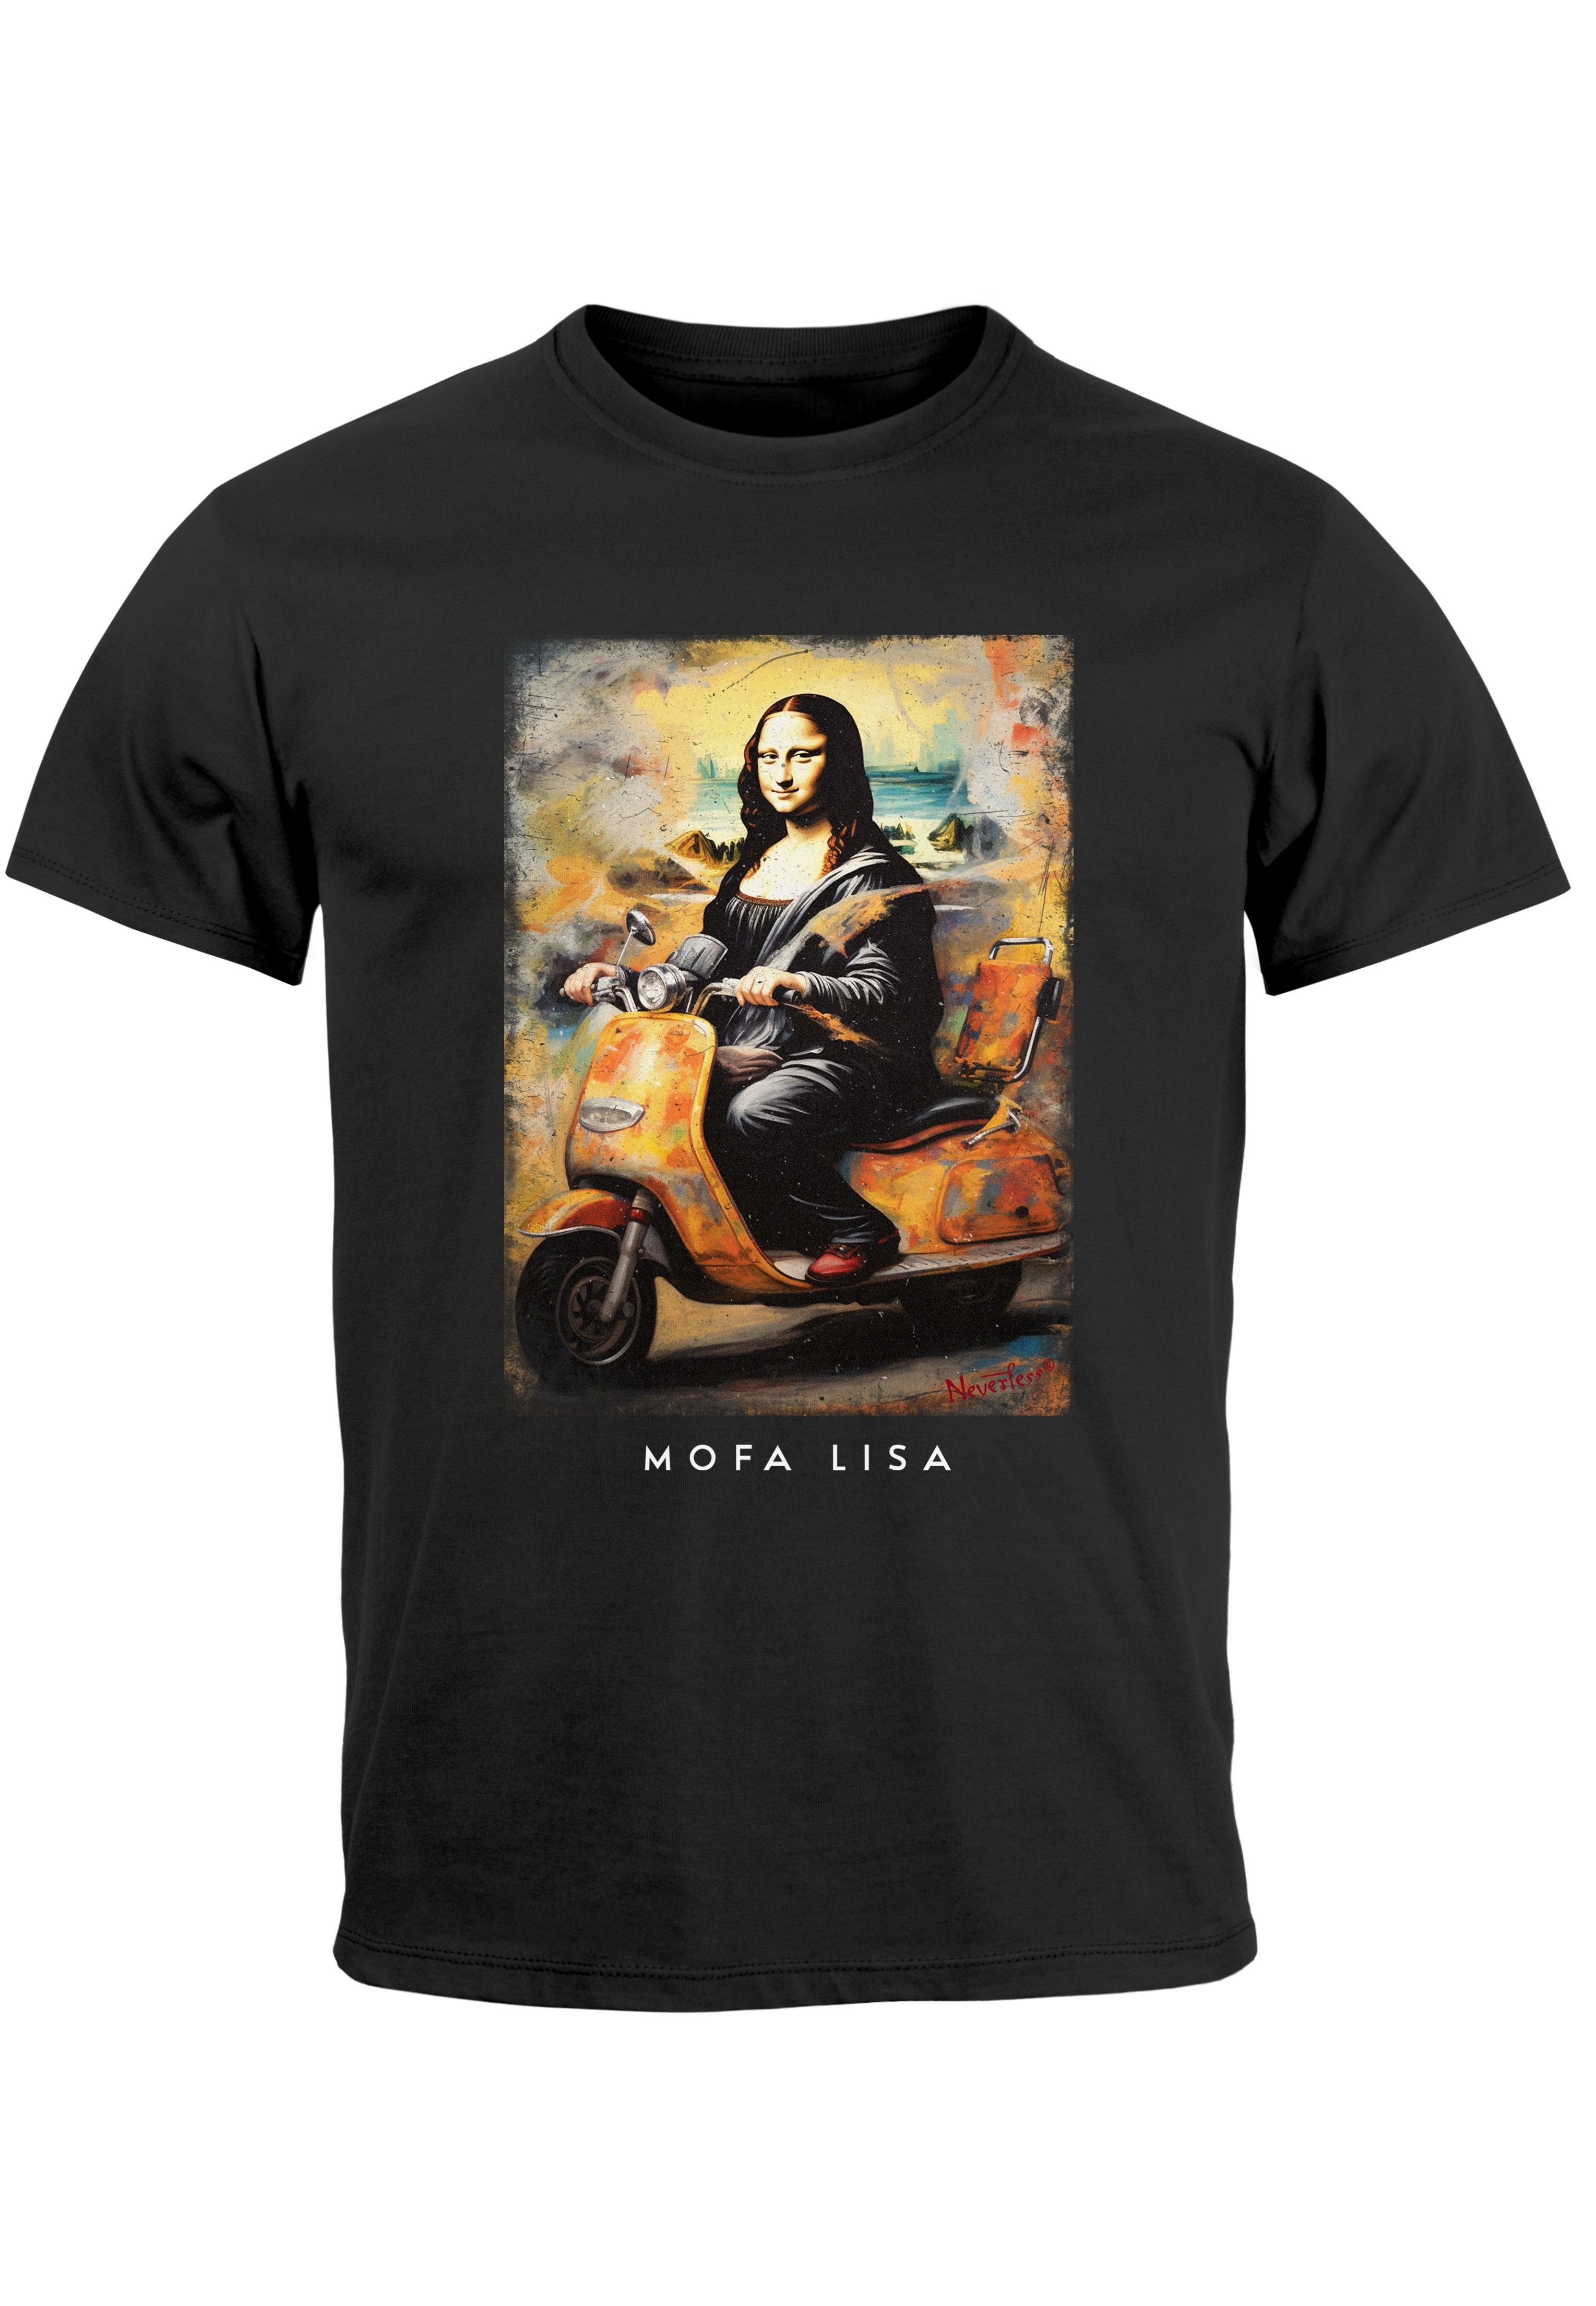 MoonWorks Print-Shirt Herren T-Shirt Print Aufdruck Mona Lisa Parodie Meme Kapuzen-Pullover mit Print Mofa Lisa schwarz | T-Shirts